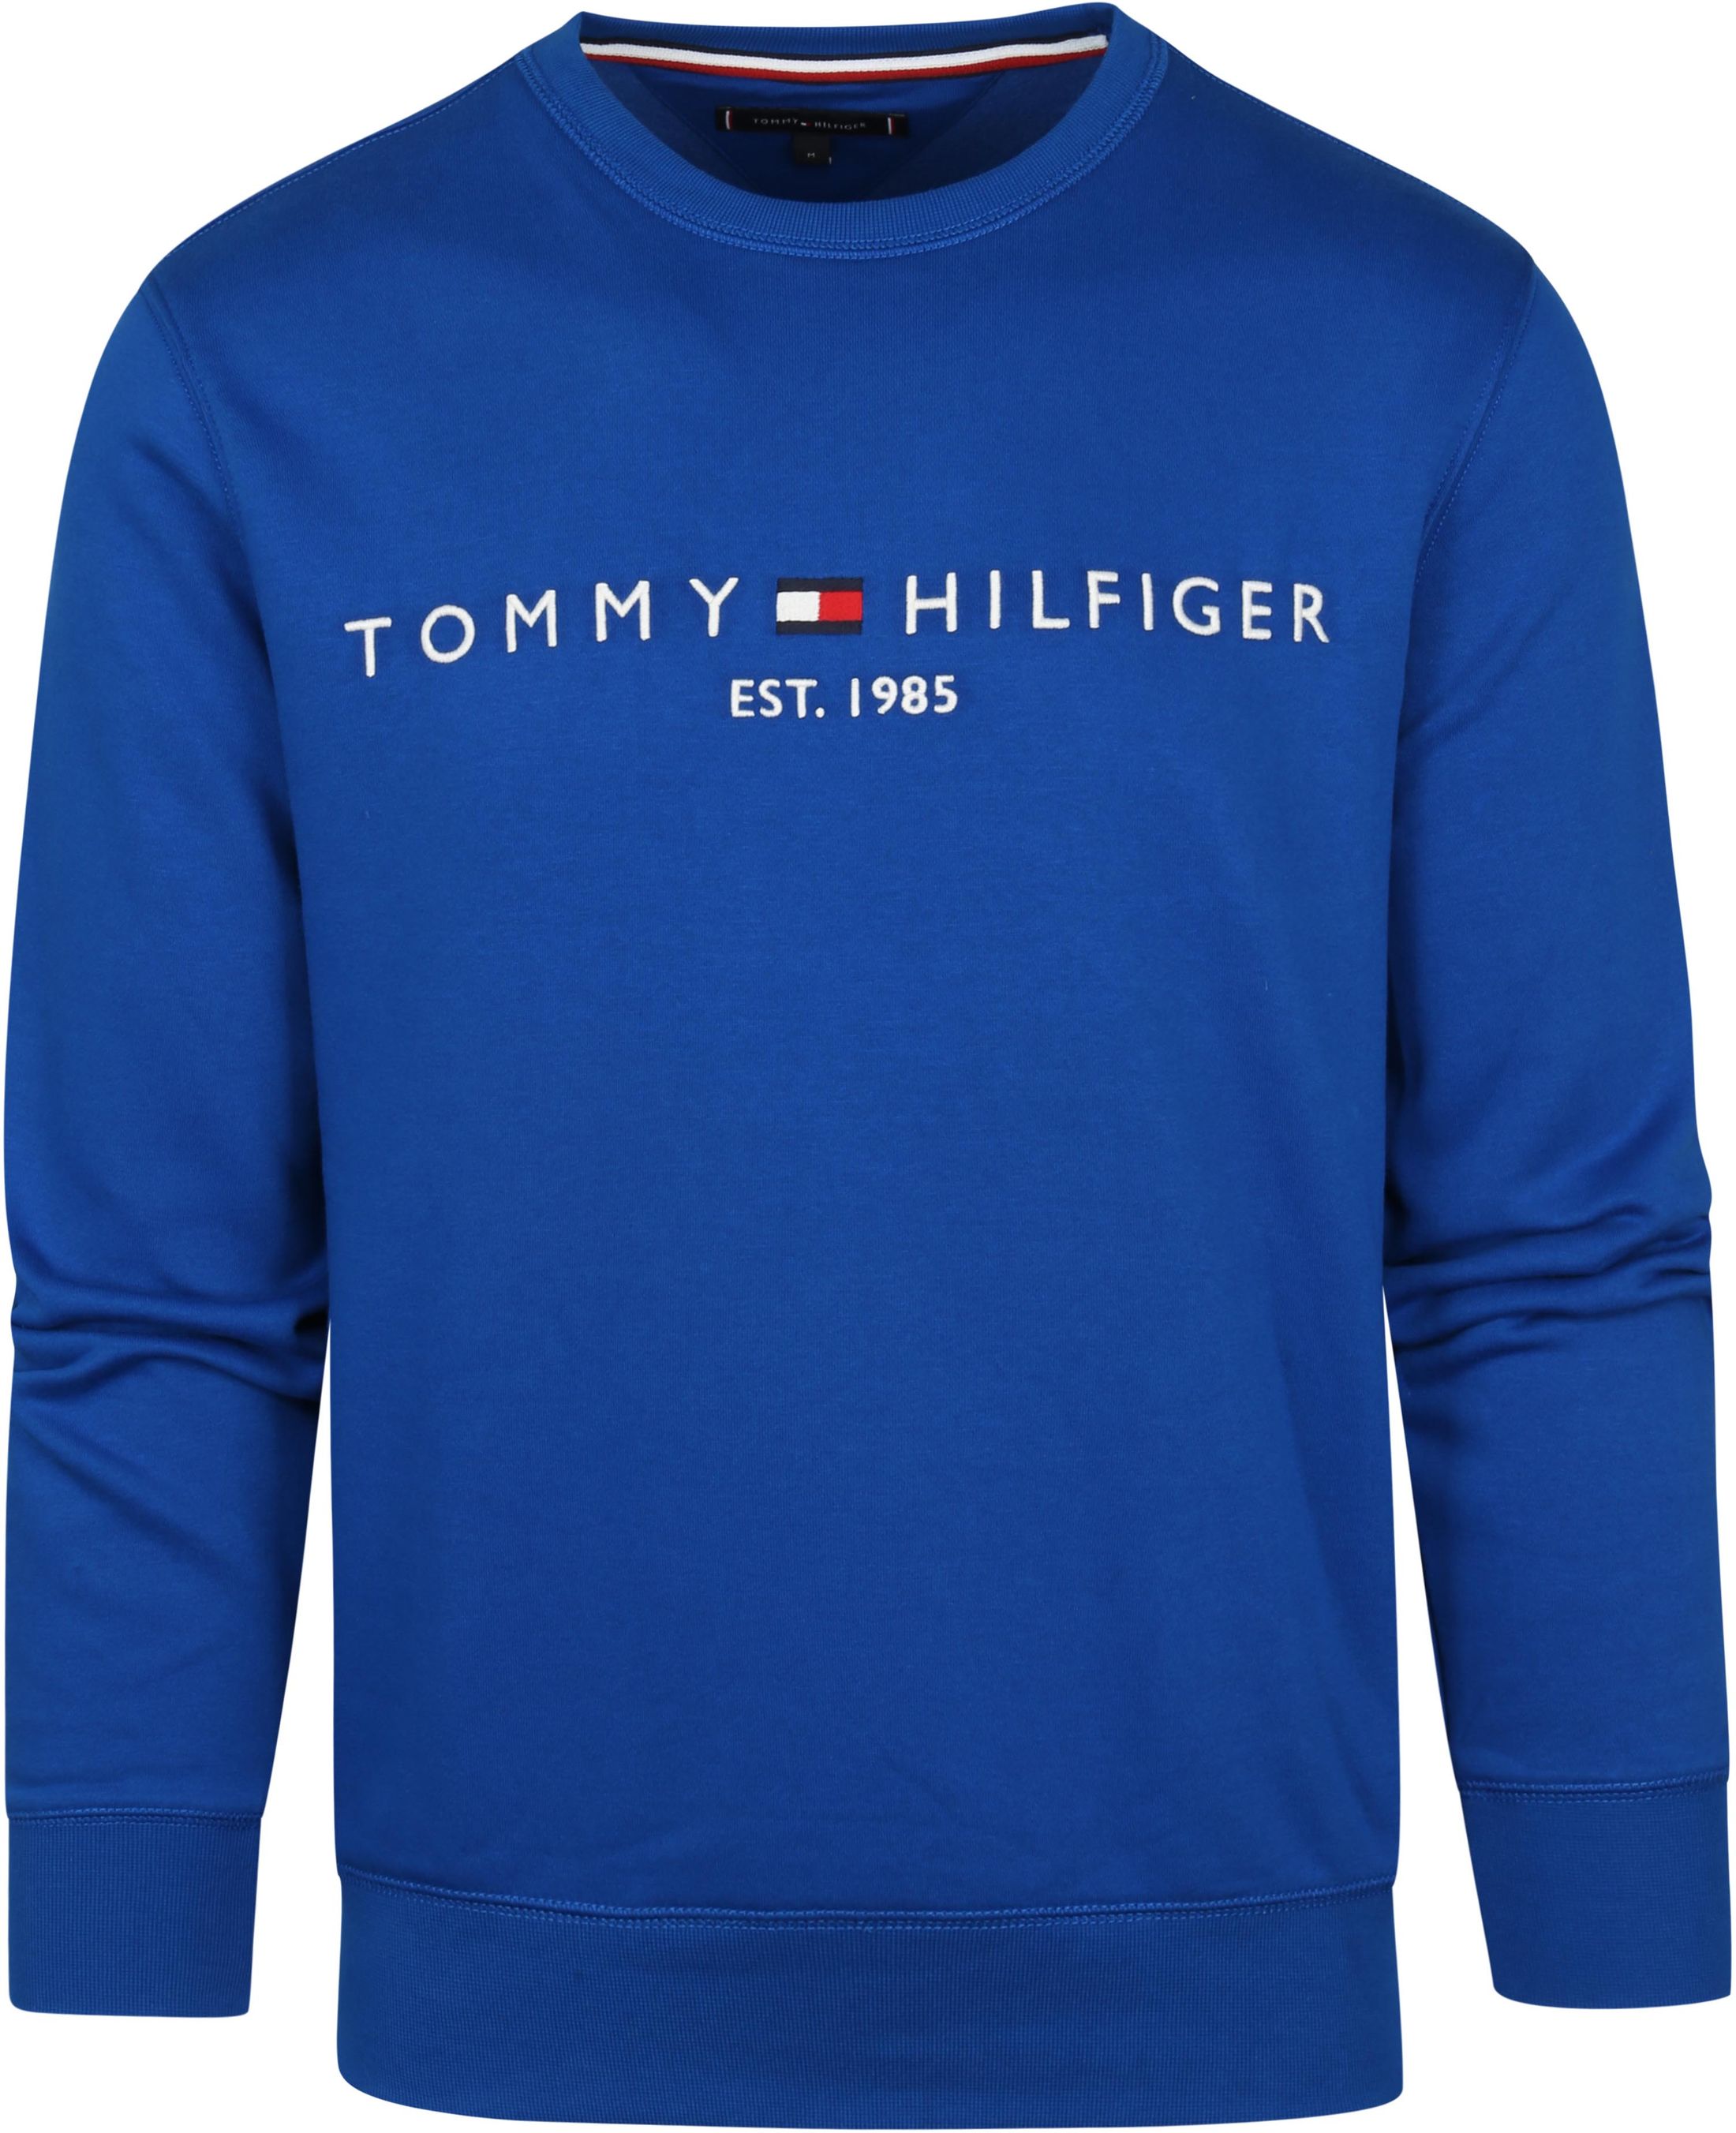 Tommy Hilfiger Sweater Logo Mid Blue size L